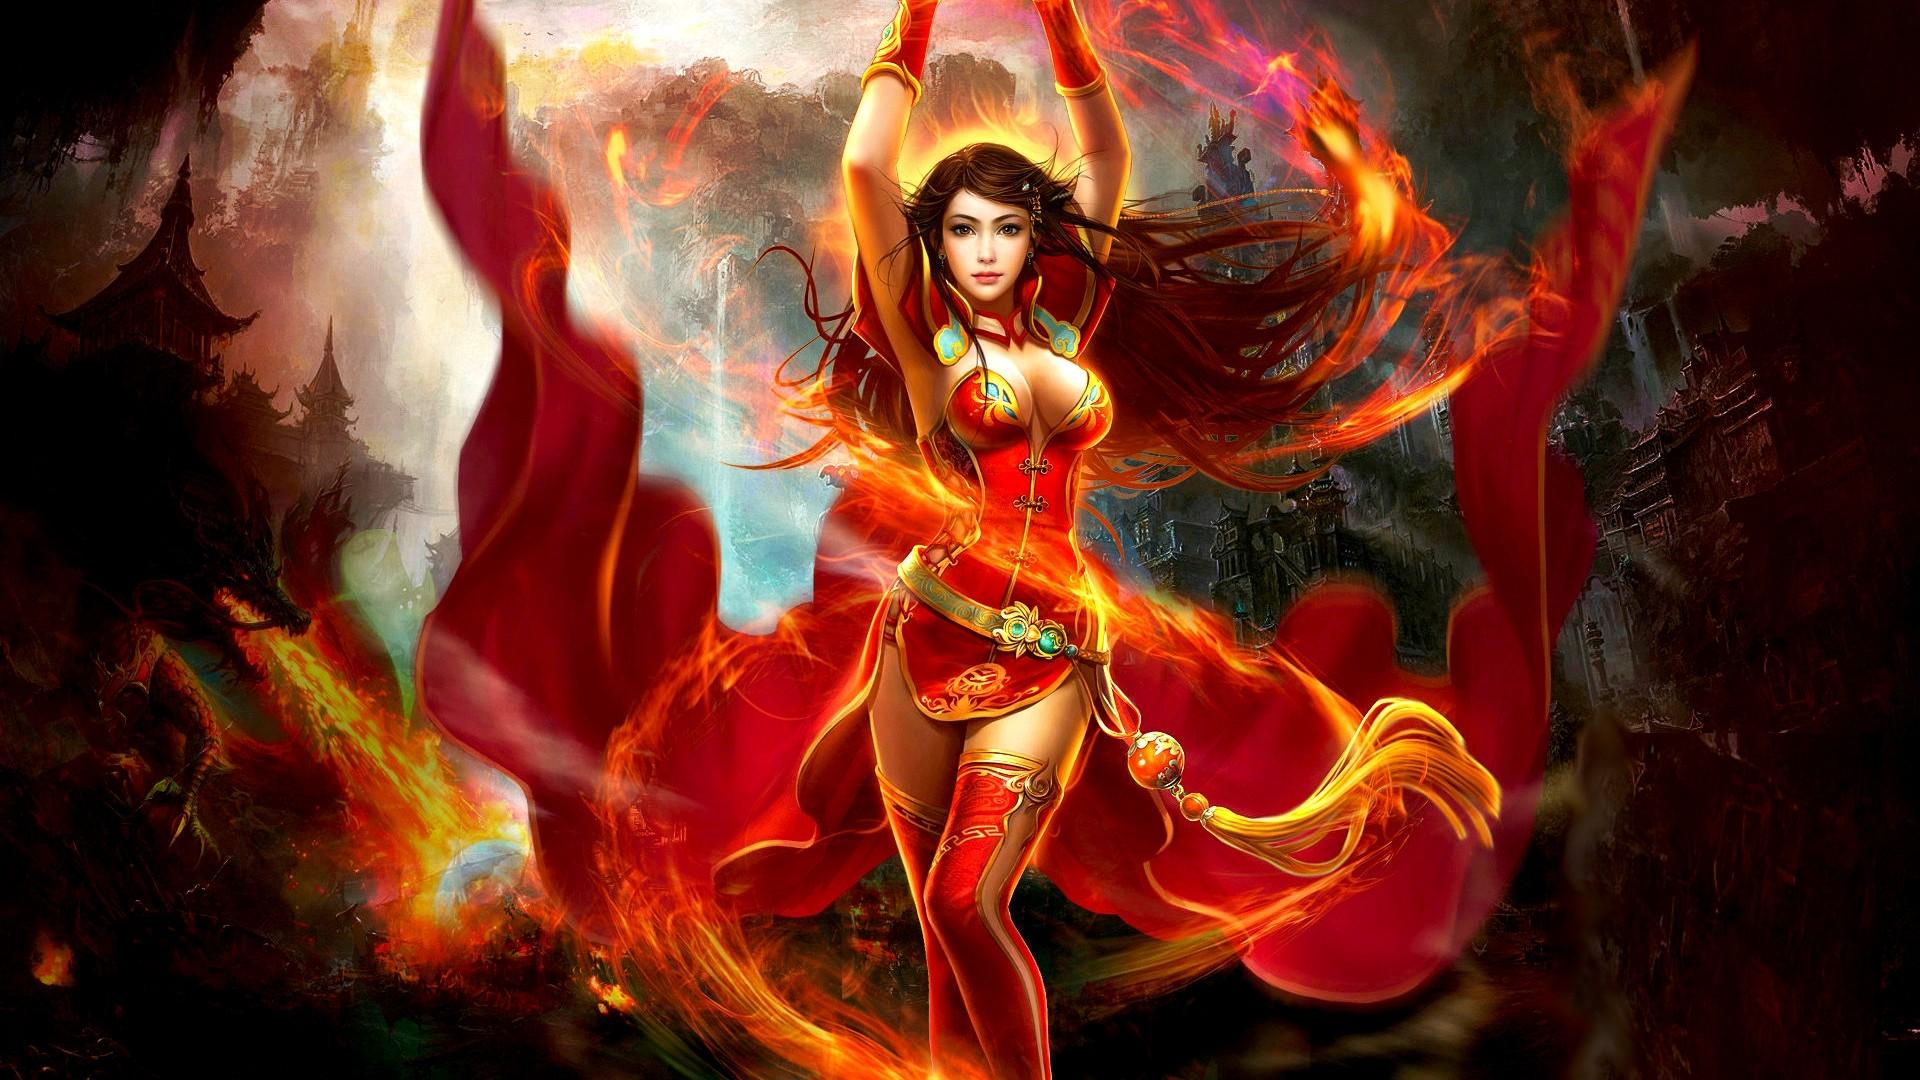 Fire Angel Fantasy Girl In Amazing Red Dress, Wallpaper13.com